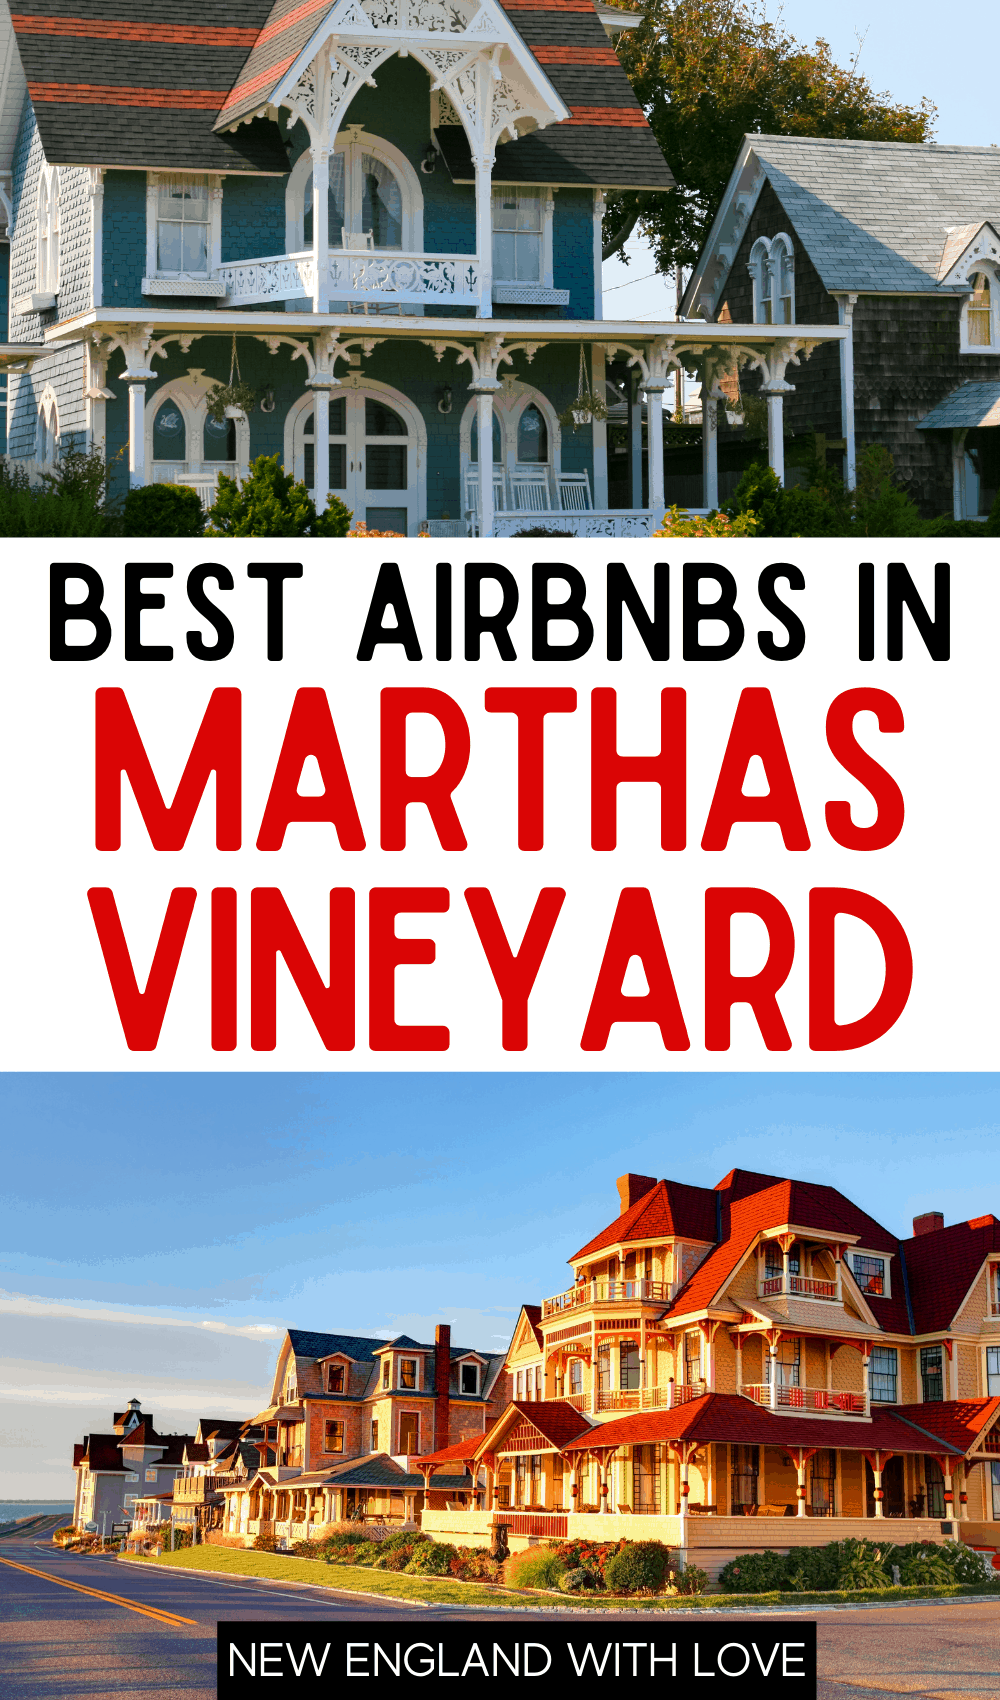 Pinterest graphic reading "BEST AIRBNBS IN MARTHA'S VINEYARD"